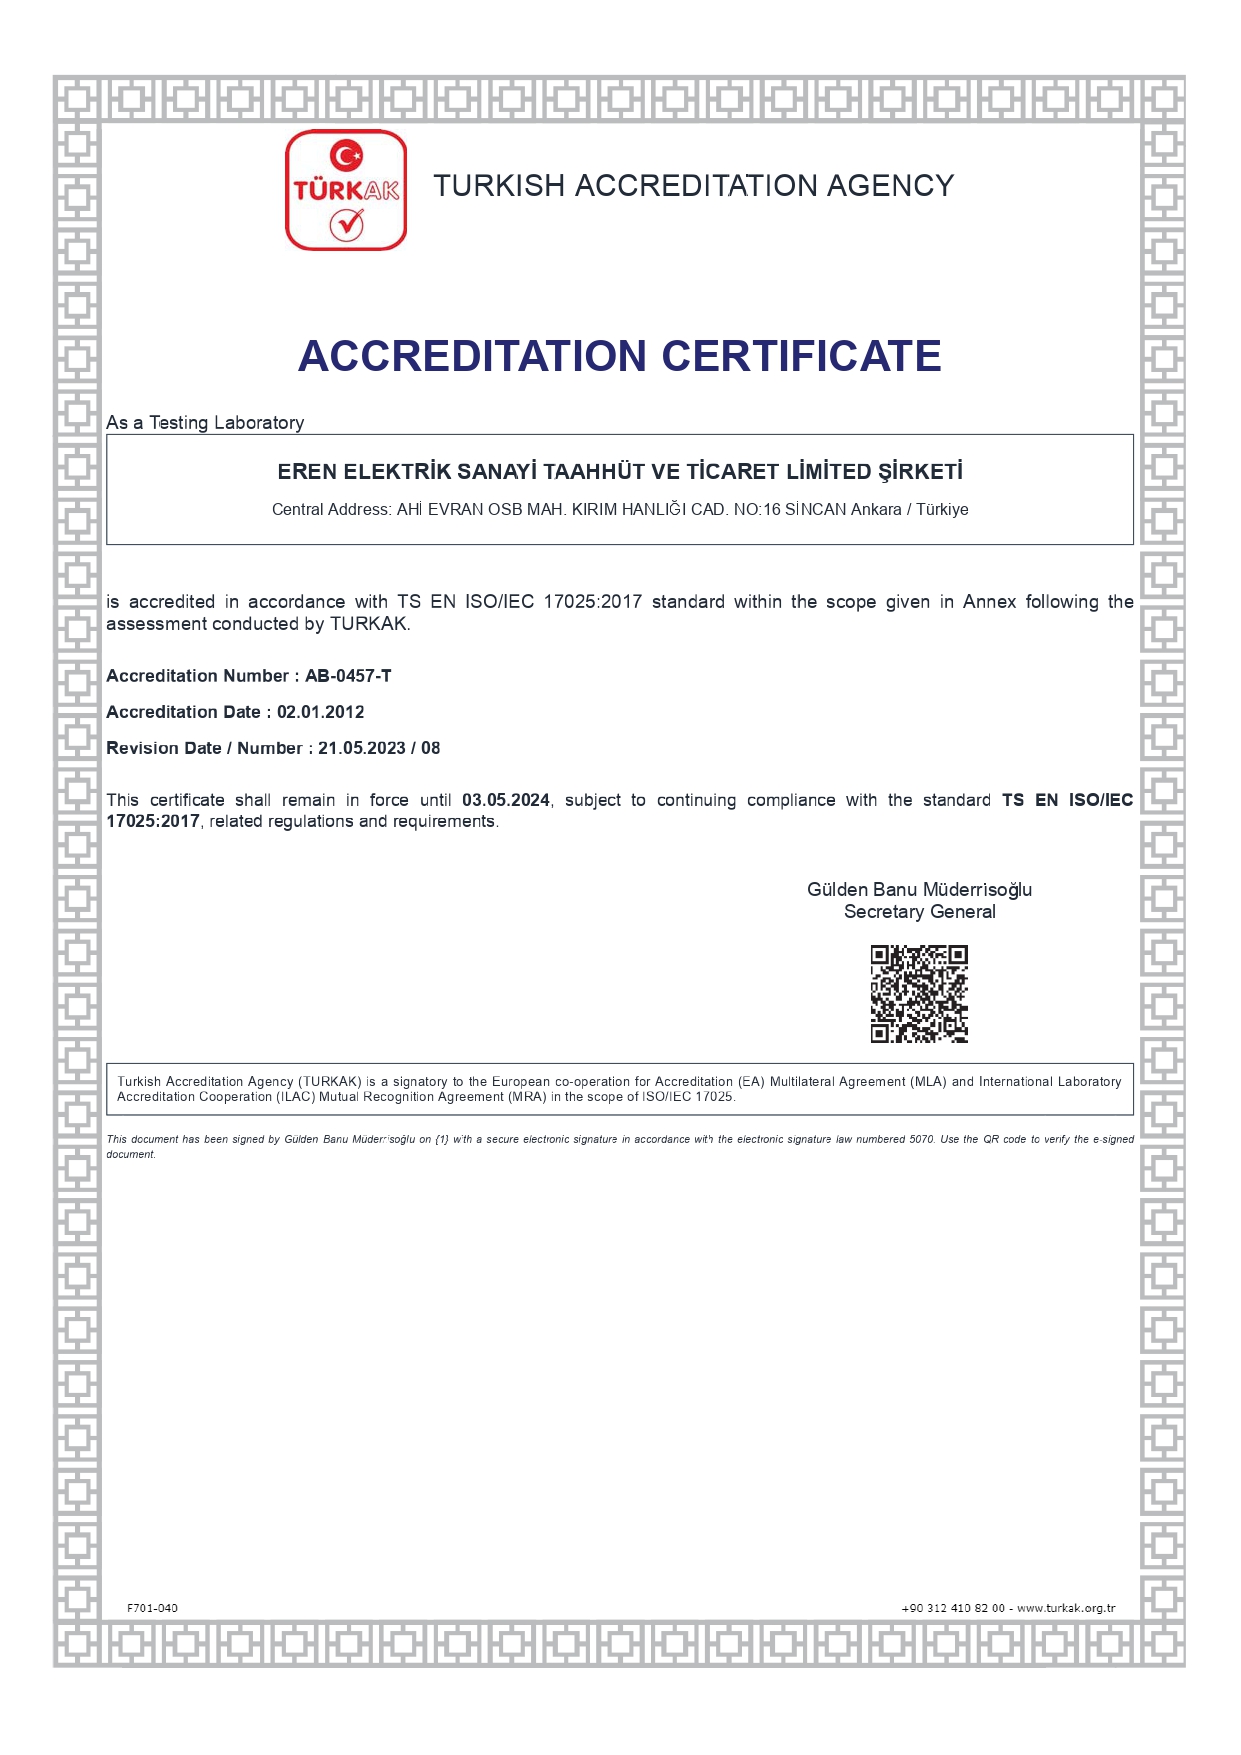 TÜRKAK Accreditation Certificate